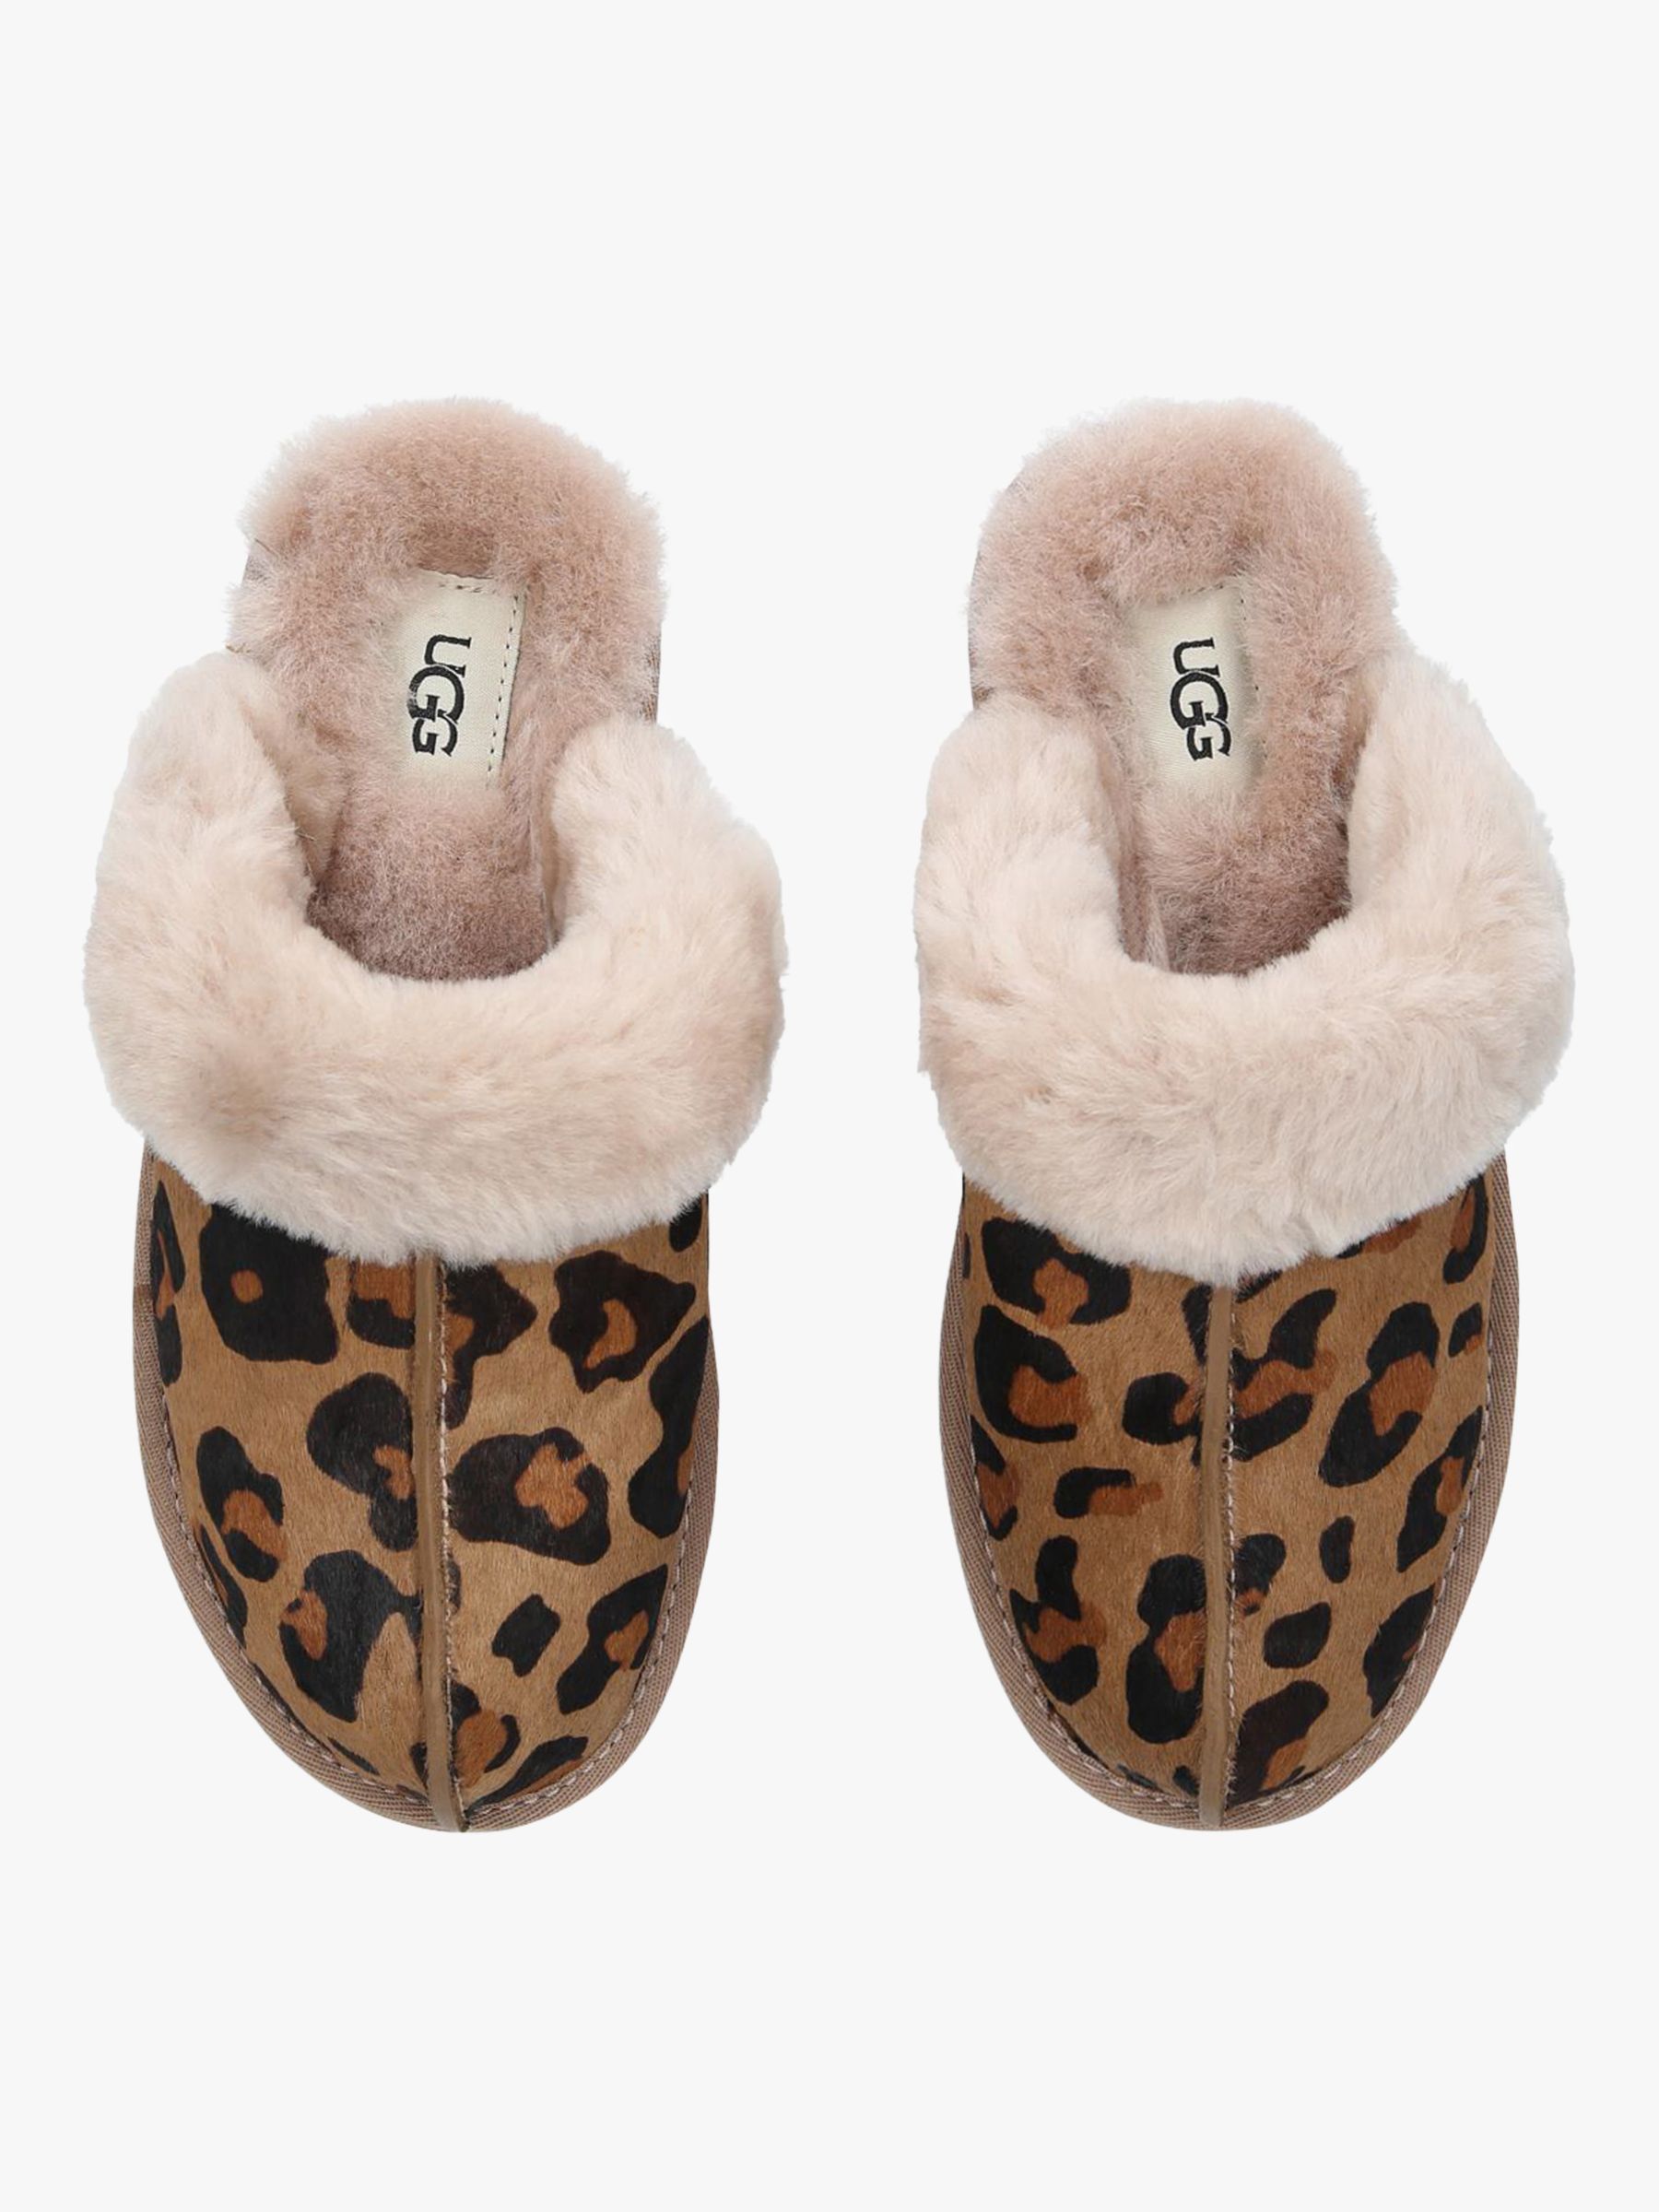 يقاوم leopard print ugg slippers 